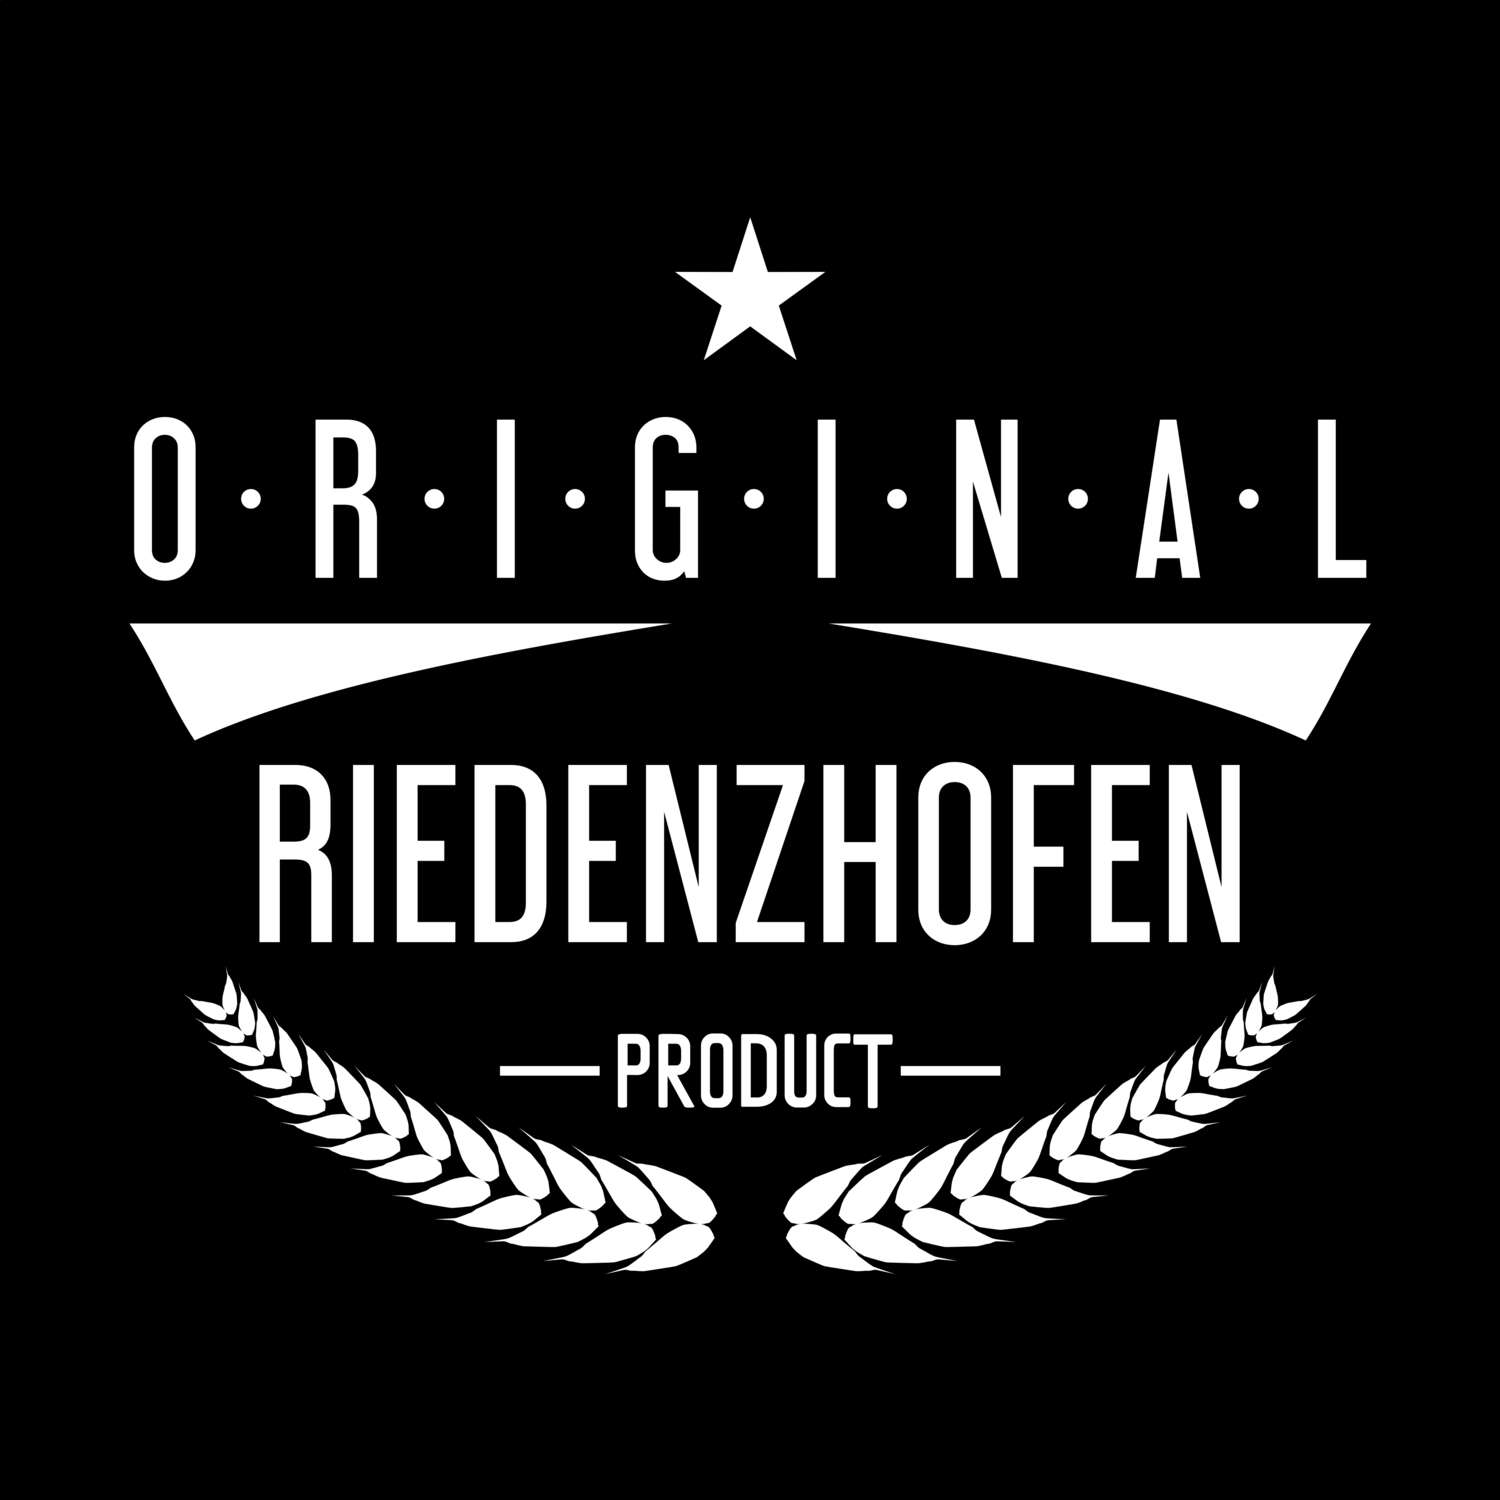 Riedenzhofen T-Shirt »Original Product«